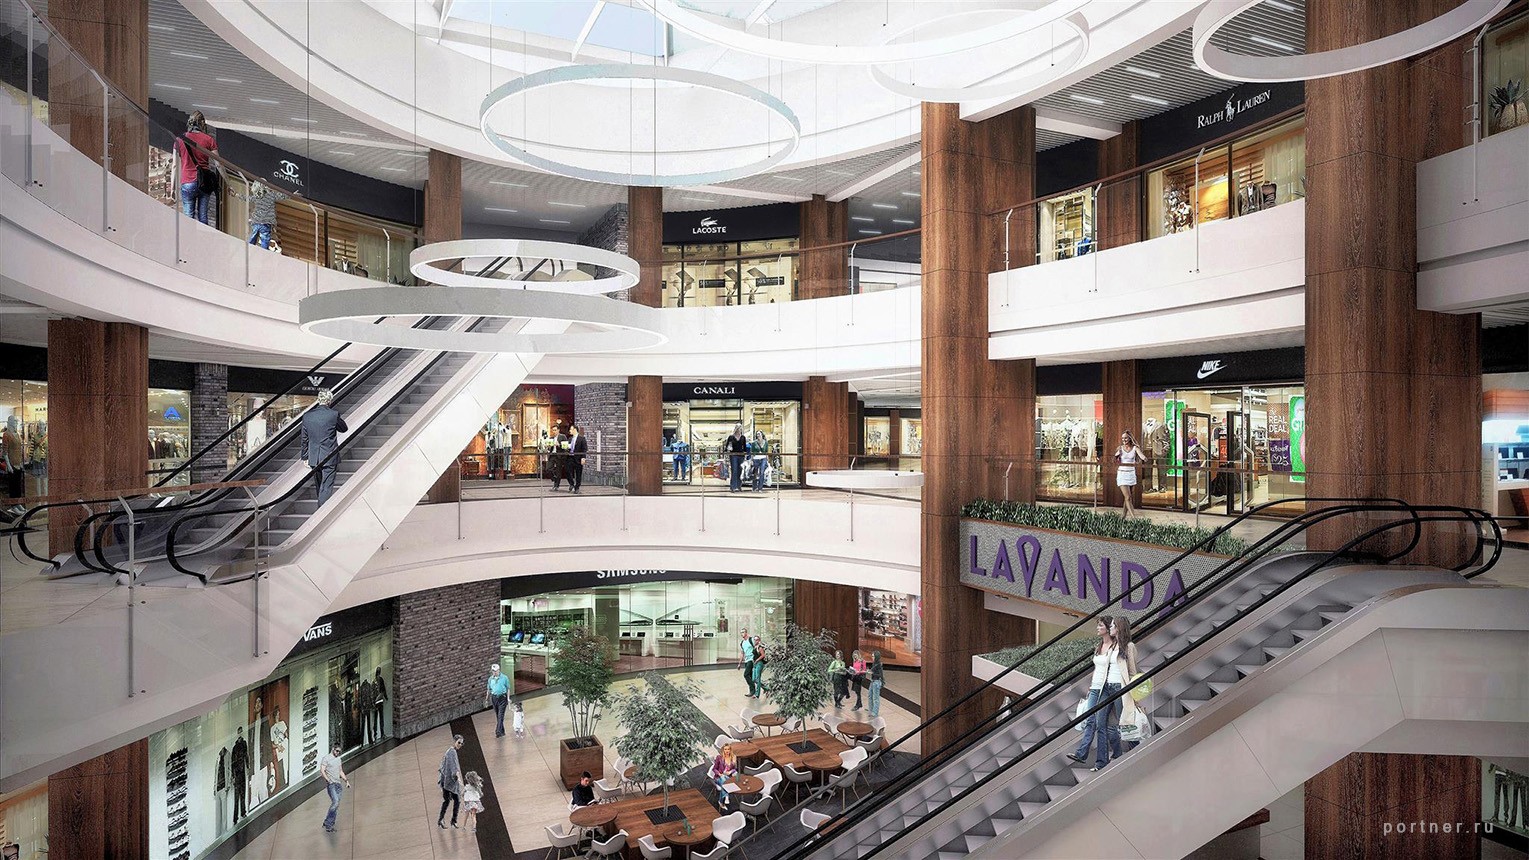 Interior of Shopping centre "Lavanda Mall"